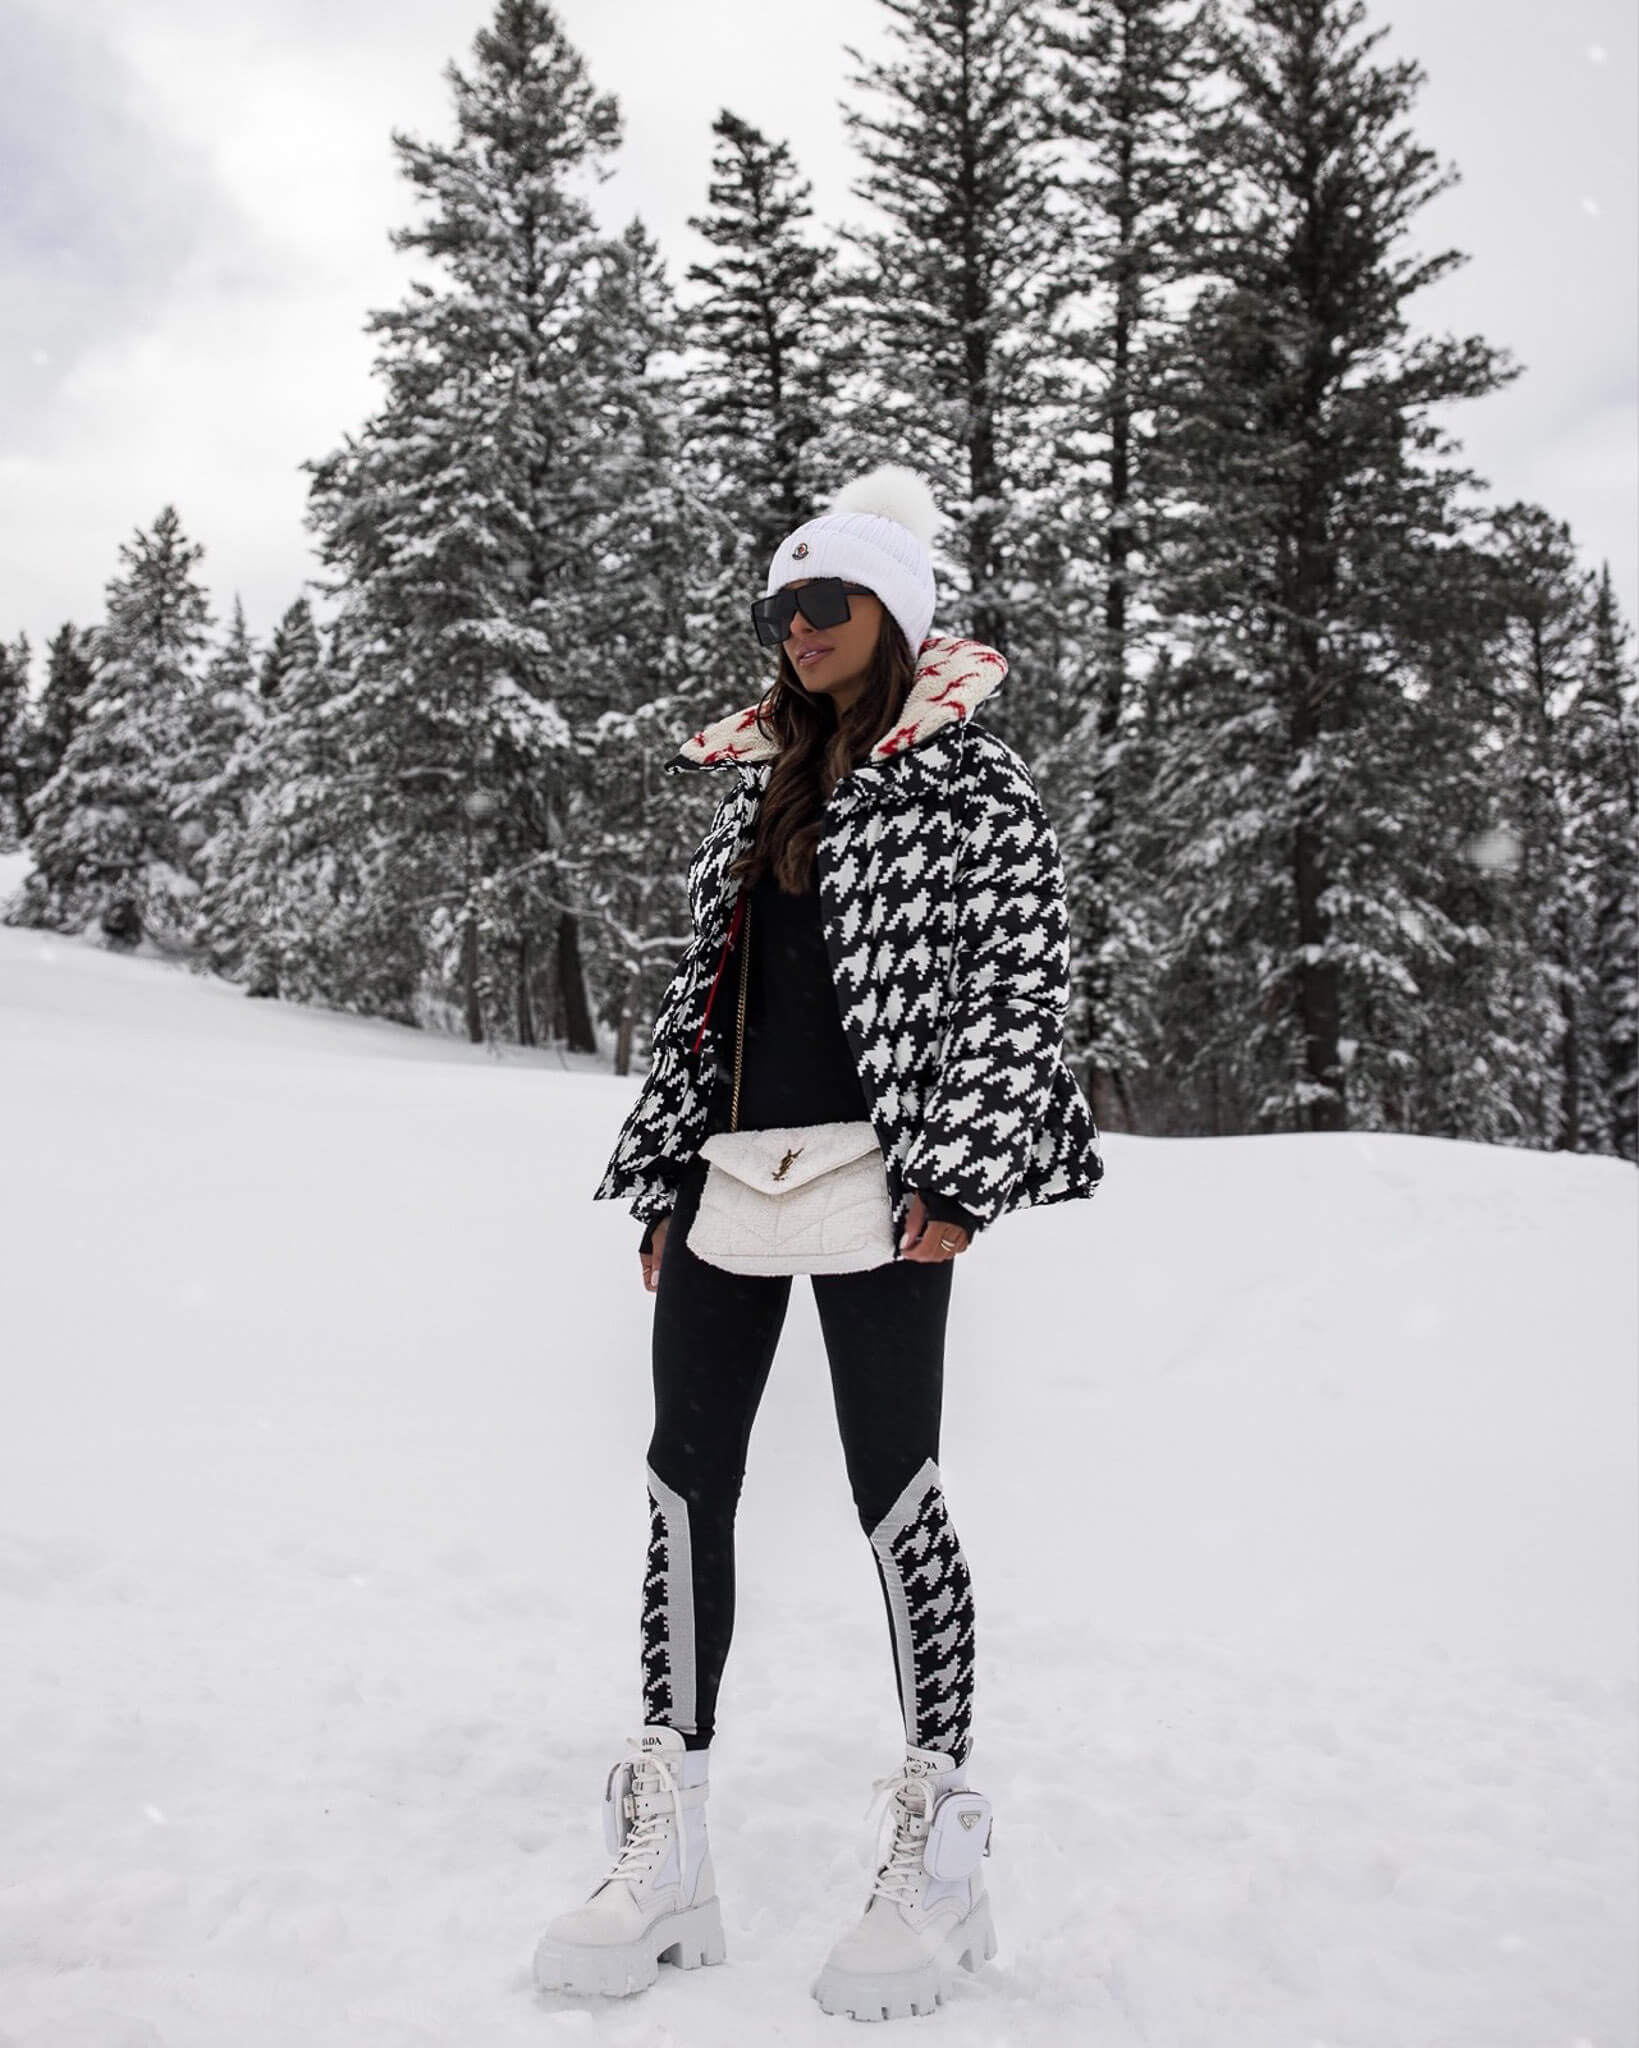 7 Chic Winter Travel Outfits To Recreate - Mia Mia Mine